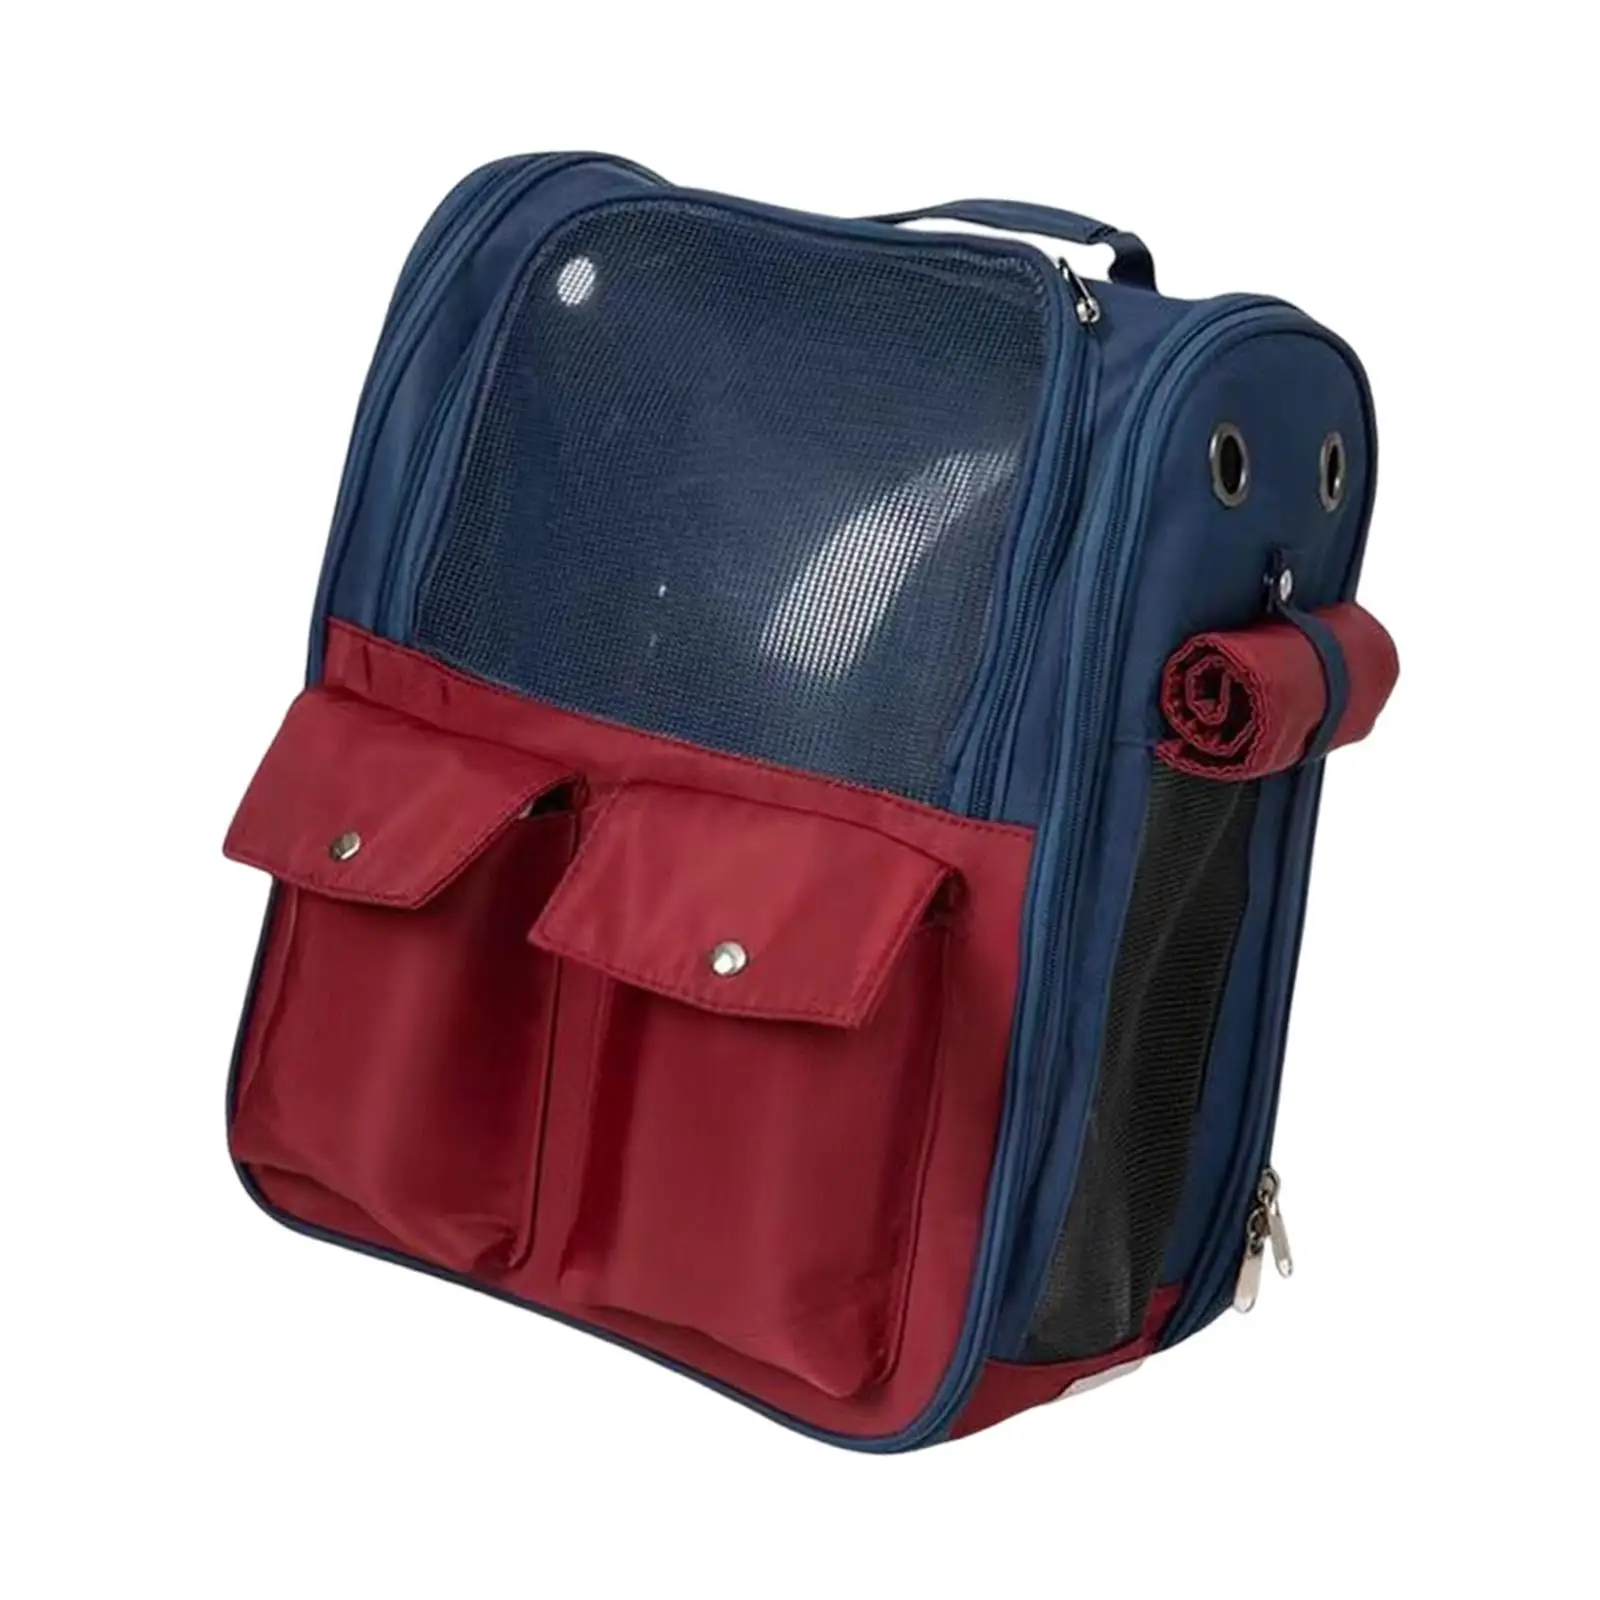 Large Cats Carrier Bag Handles Handbag Portable Comfortable Backpack for Dog Outdoor